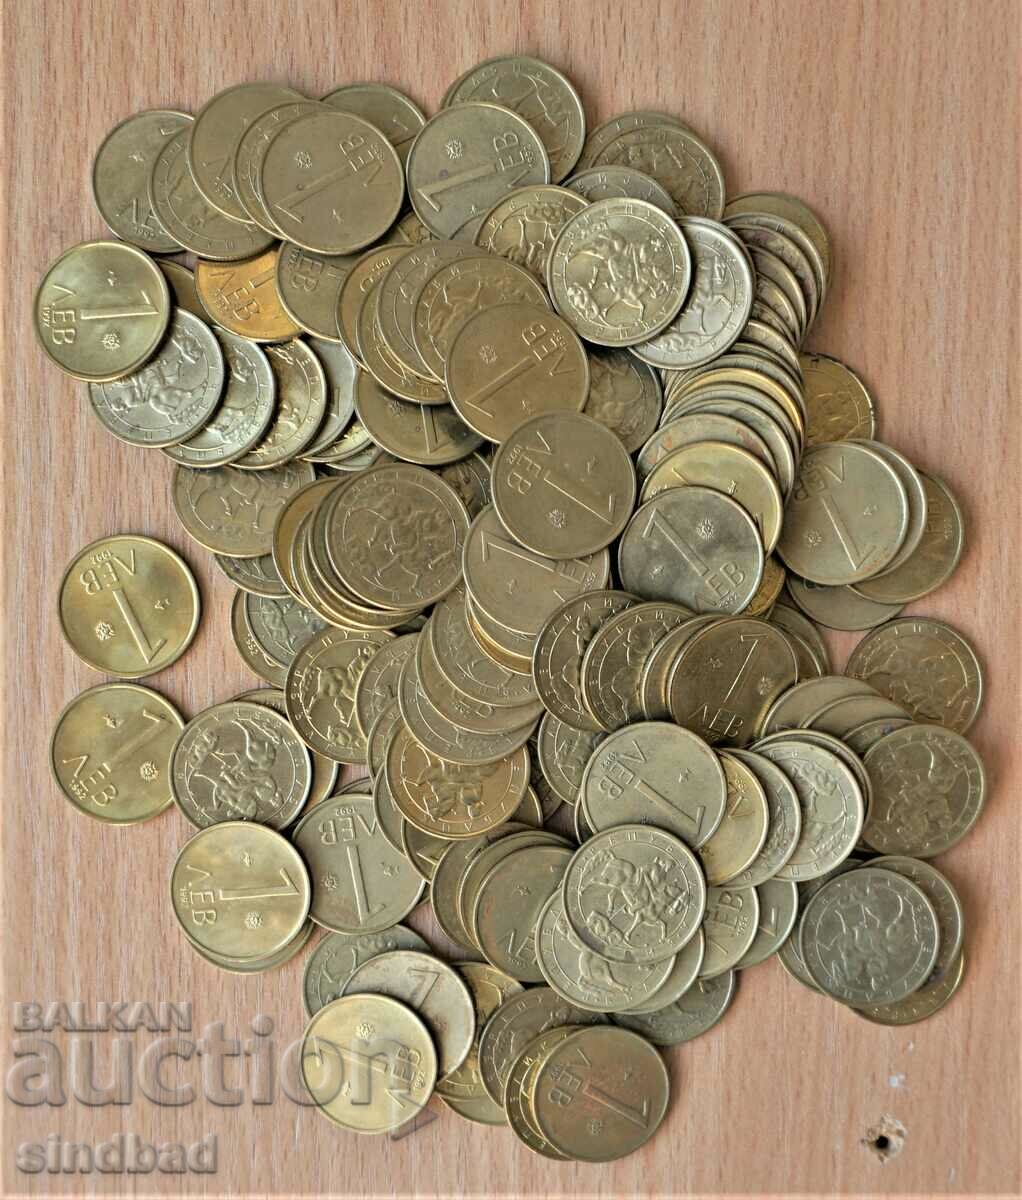 Coins 1 BGN 1992 - 125 pieces